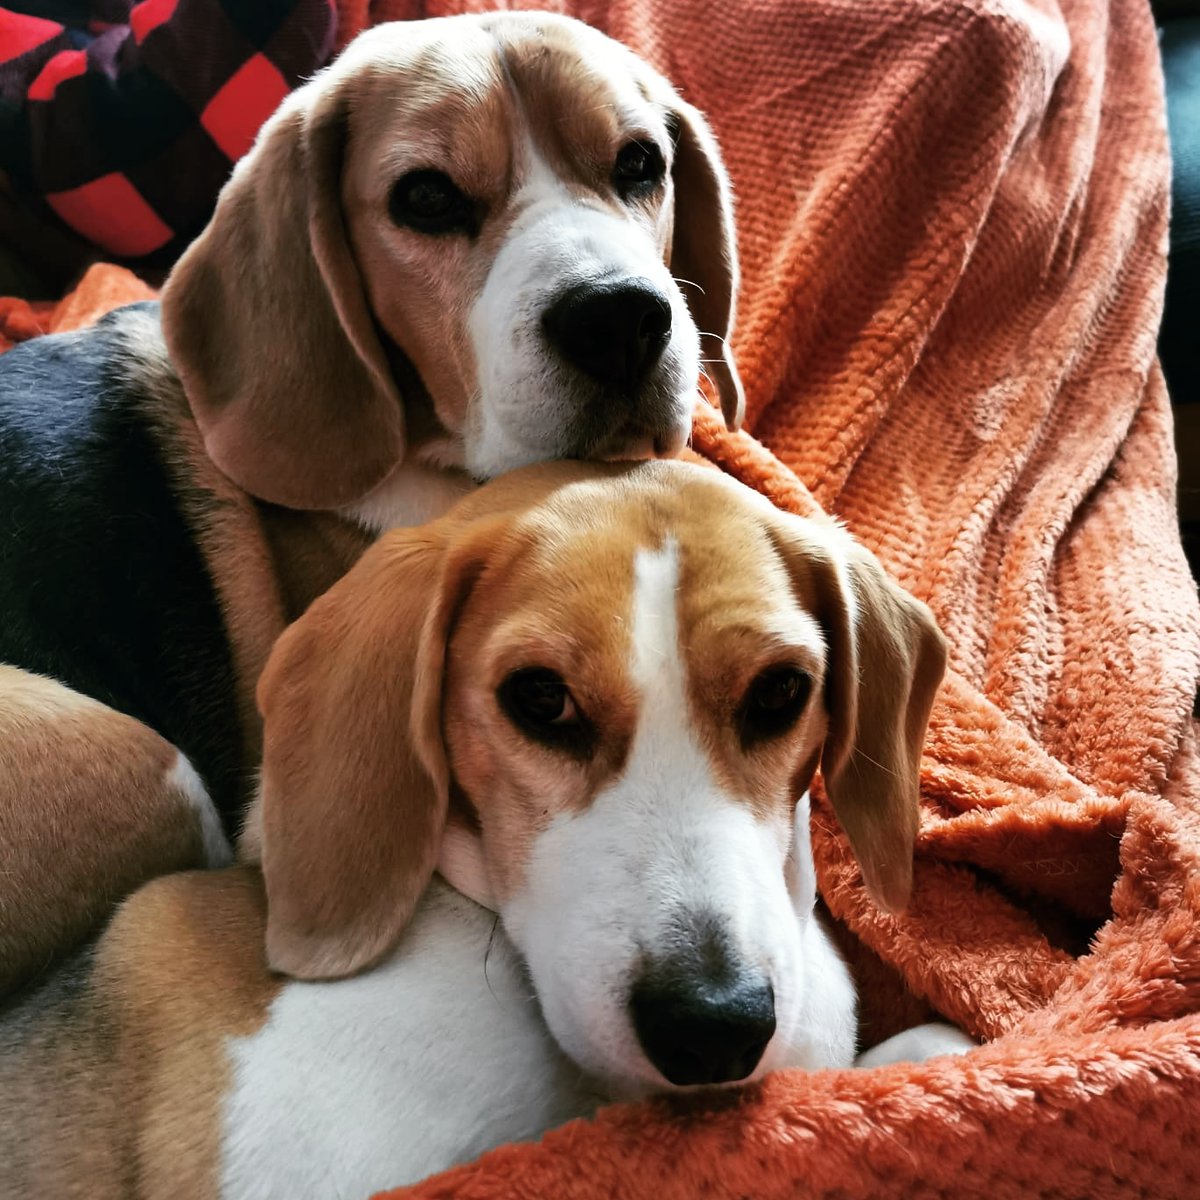 Happy New Year!!

And @PabloOfGlasgow says hello too! 

#beagle #beaglepuppy #beaglesofglasgow #houndsofglasgow #hounddog #dogsofglasgow